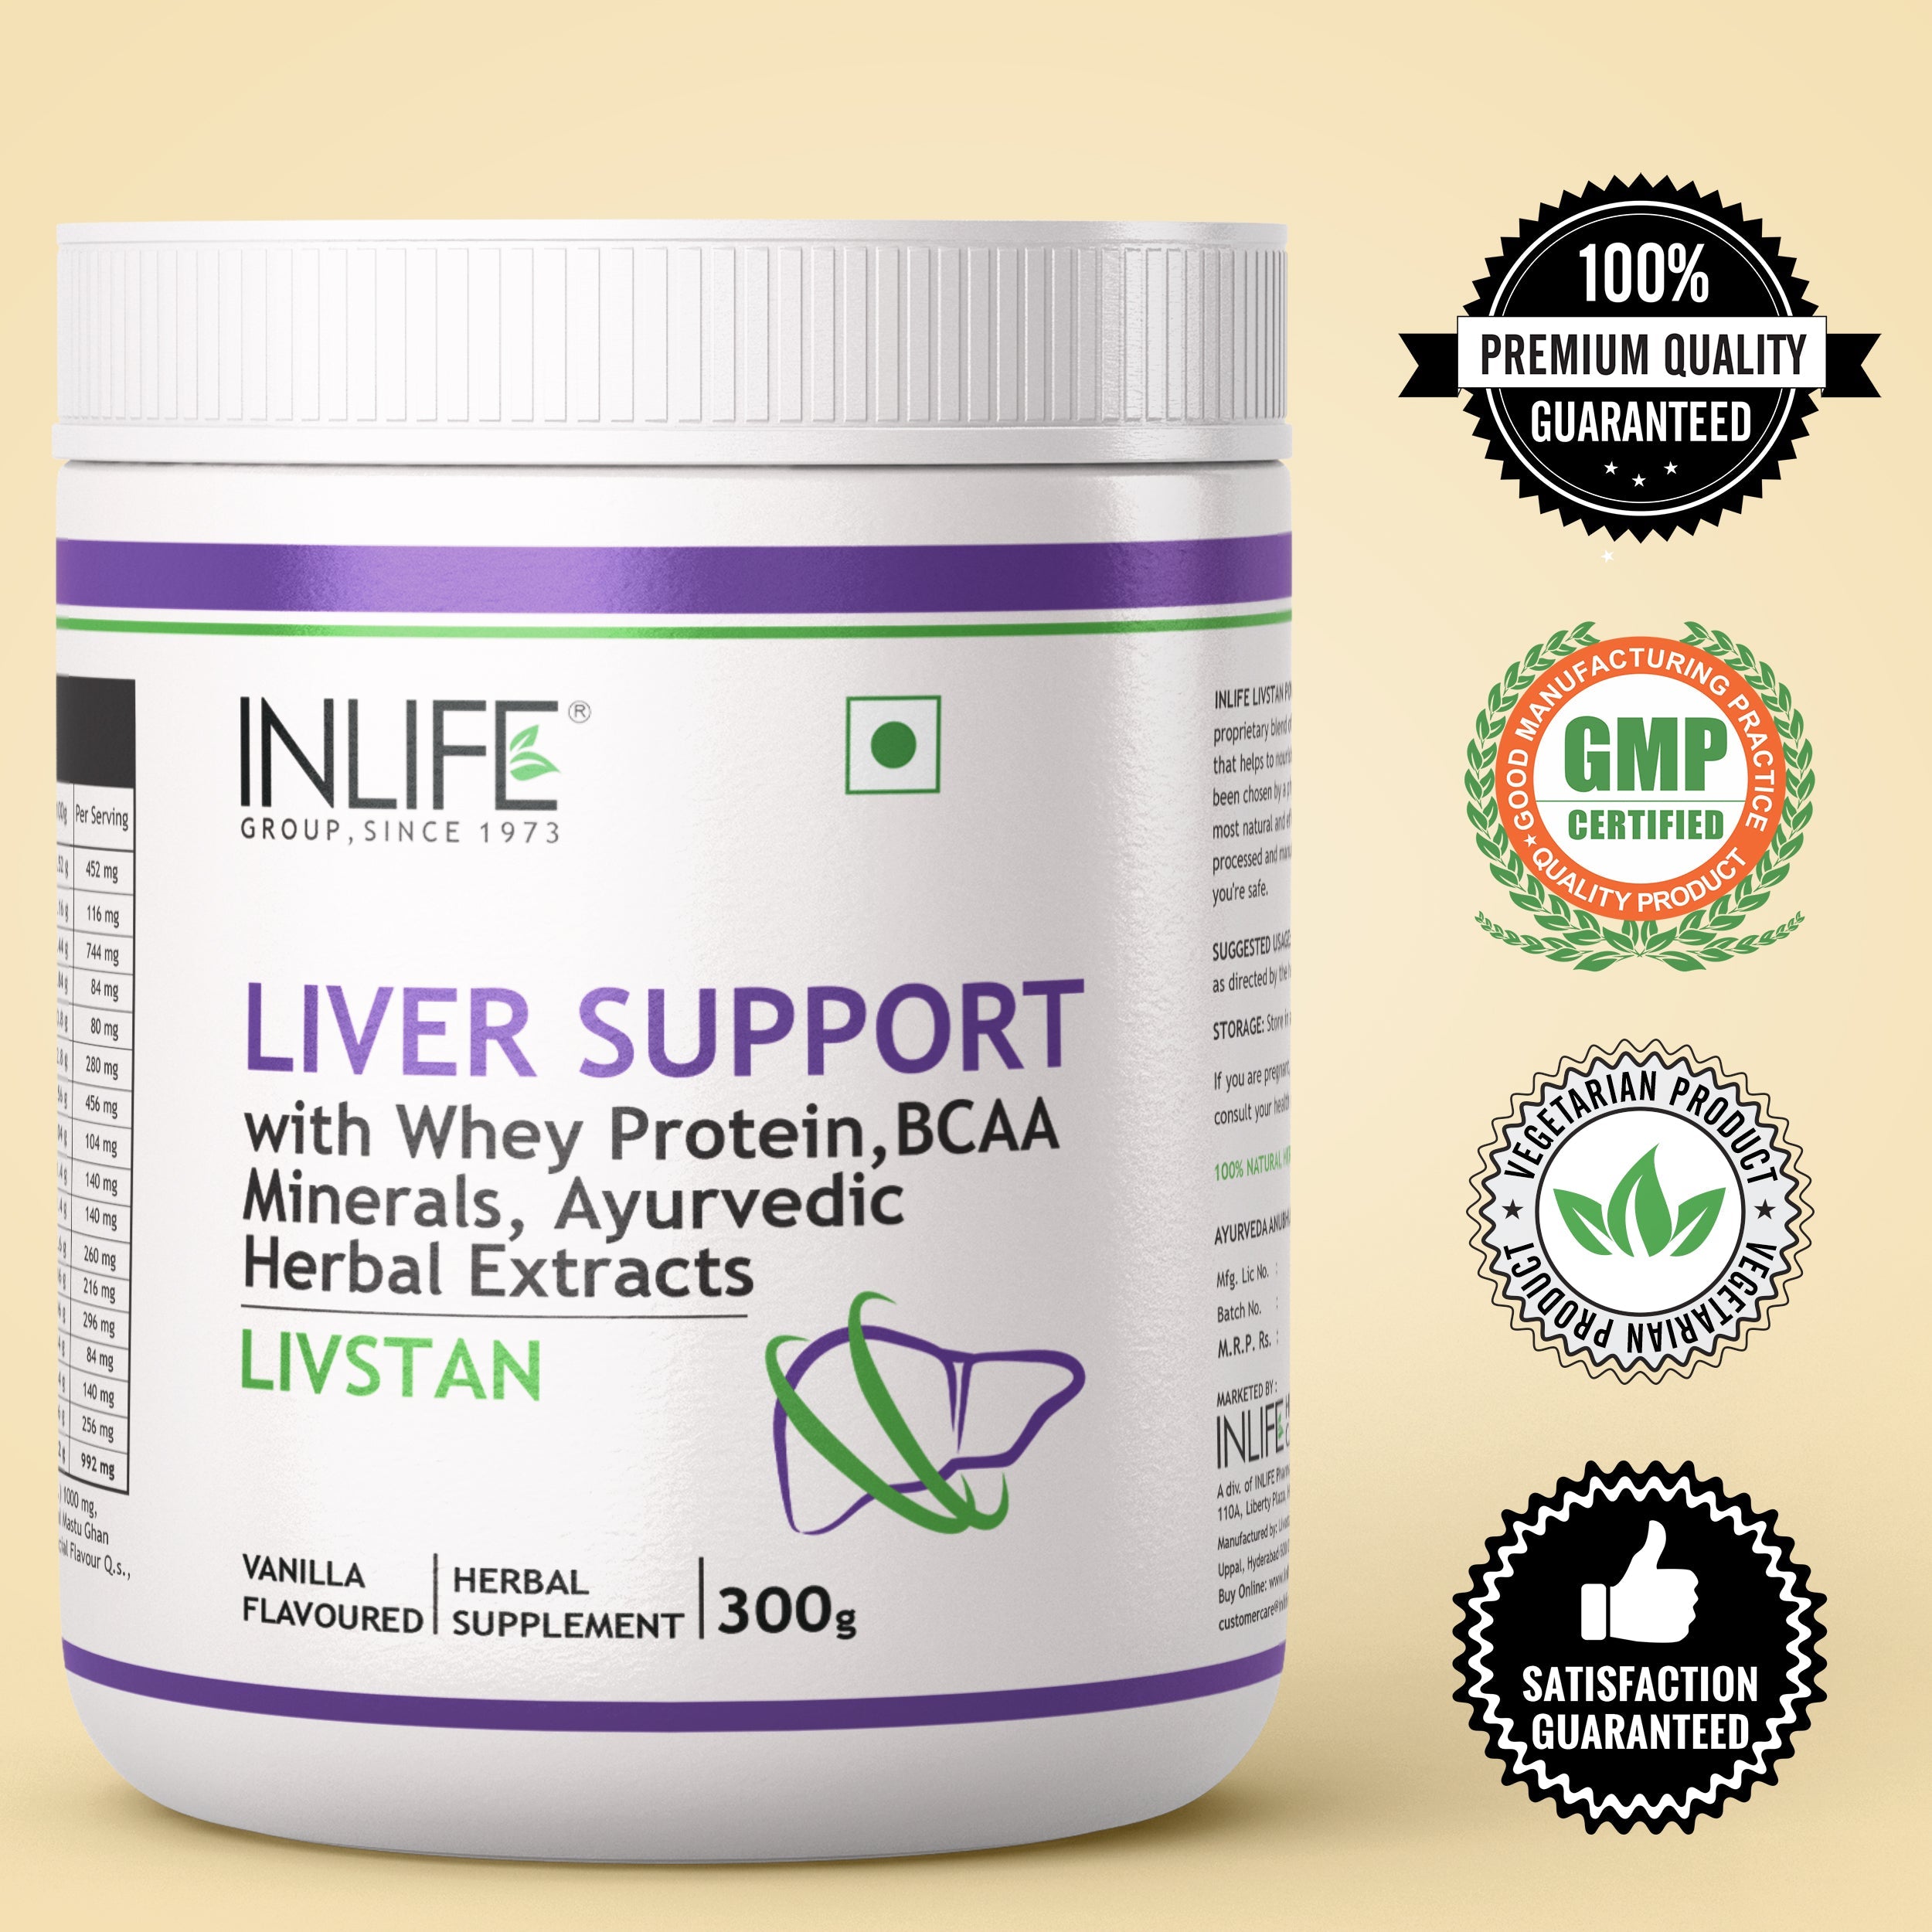 INLIFE Livstan Liver Support Powder, Whey Protein with Ayurvedic Herbs, 300g (Vanilla)